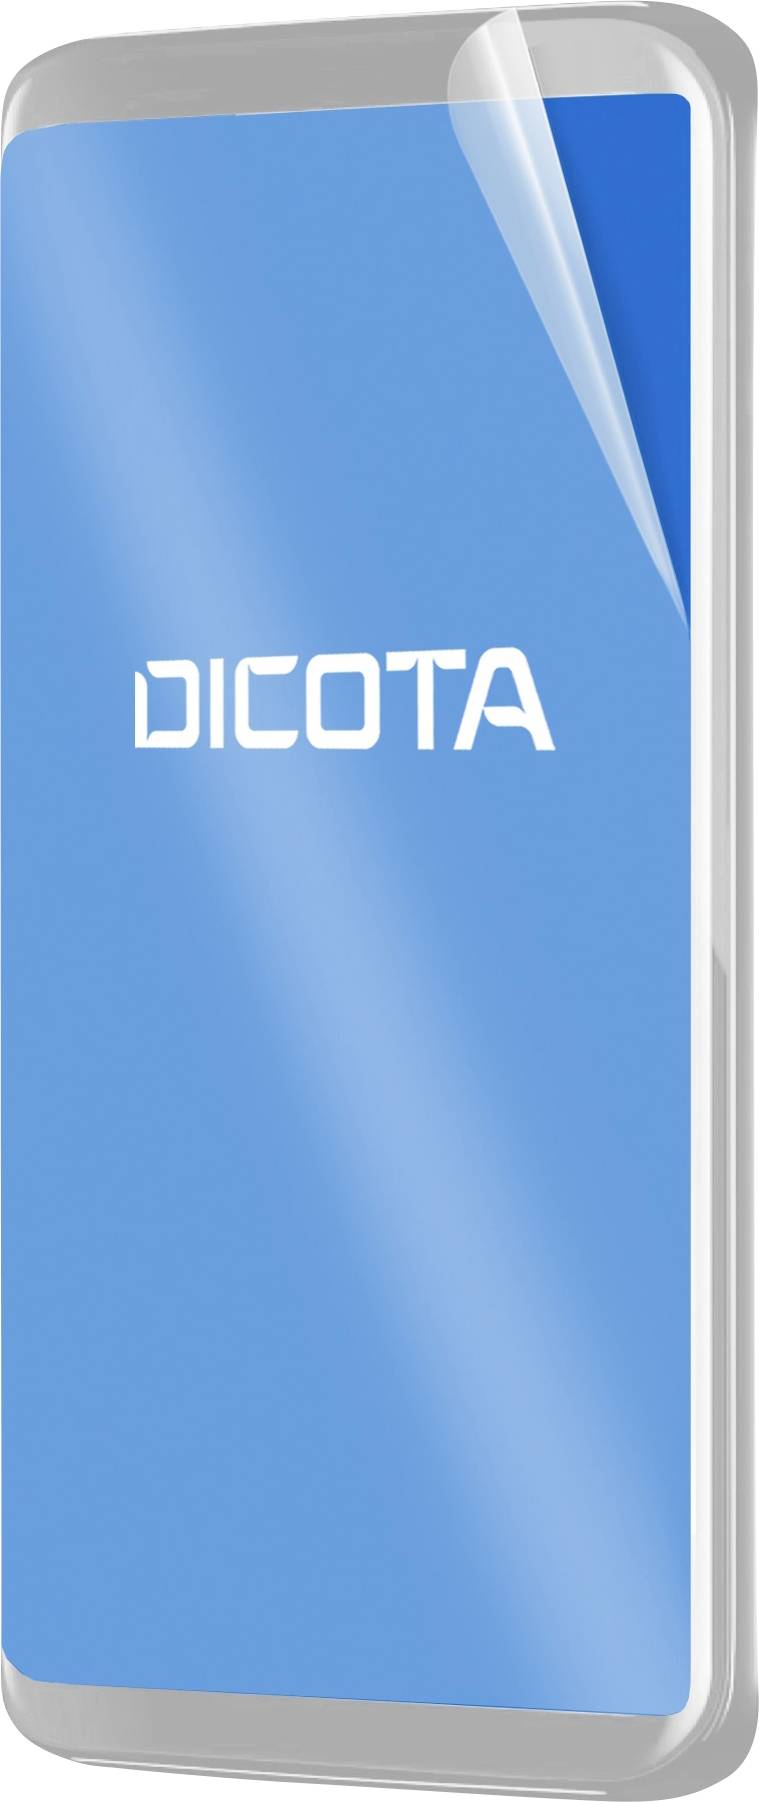 DICOTA Blendschutzfilter 9H für iPhone 12/12 Pro selbstklebend